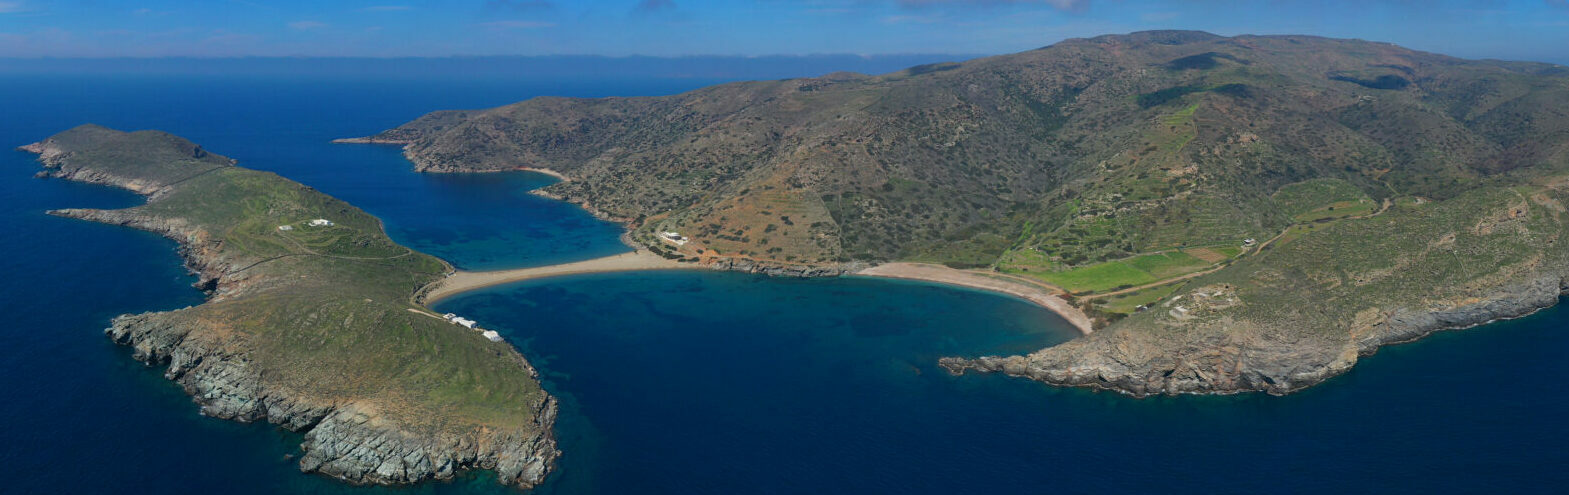 Kythnos: 92 beaches in one island